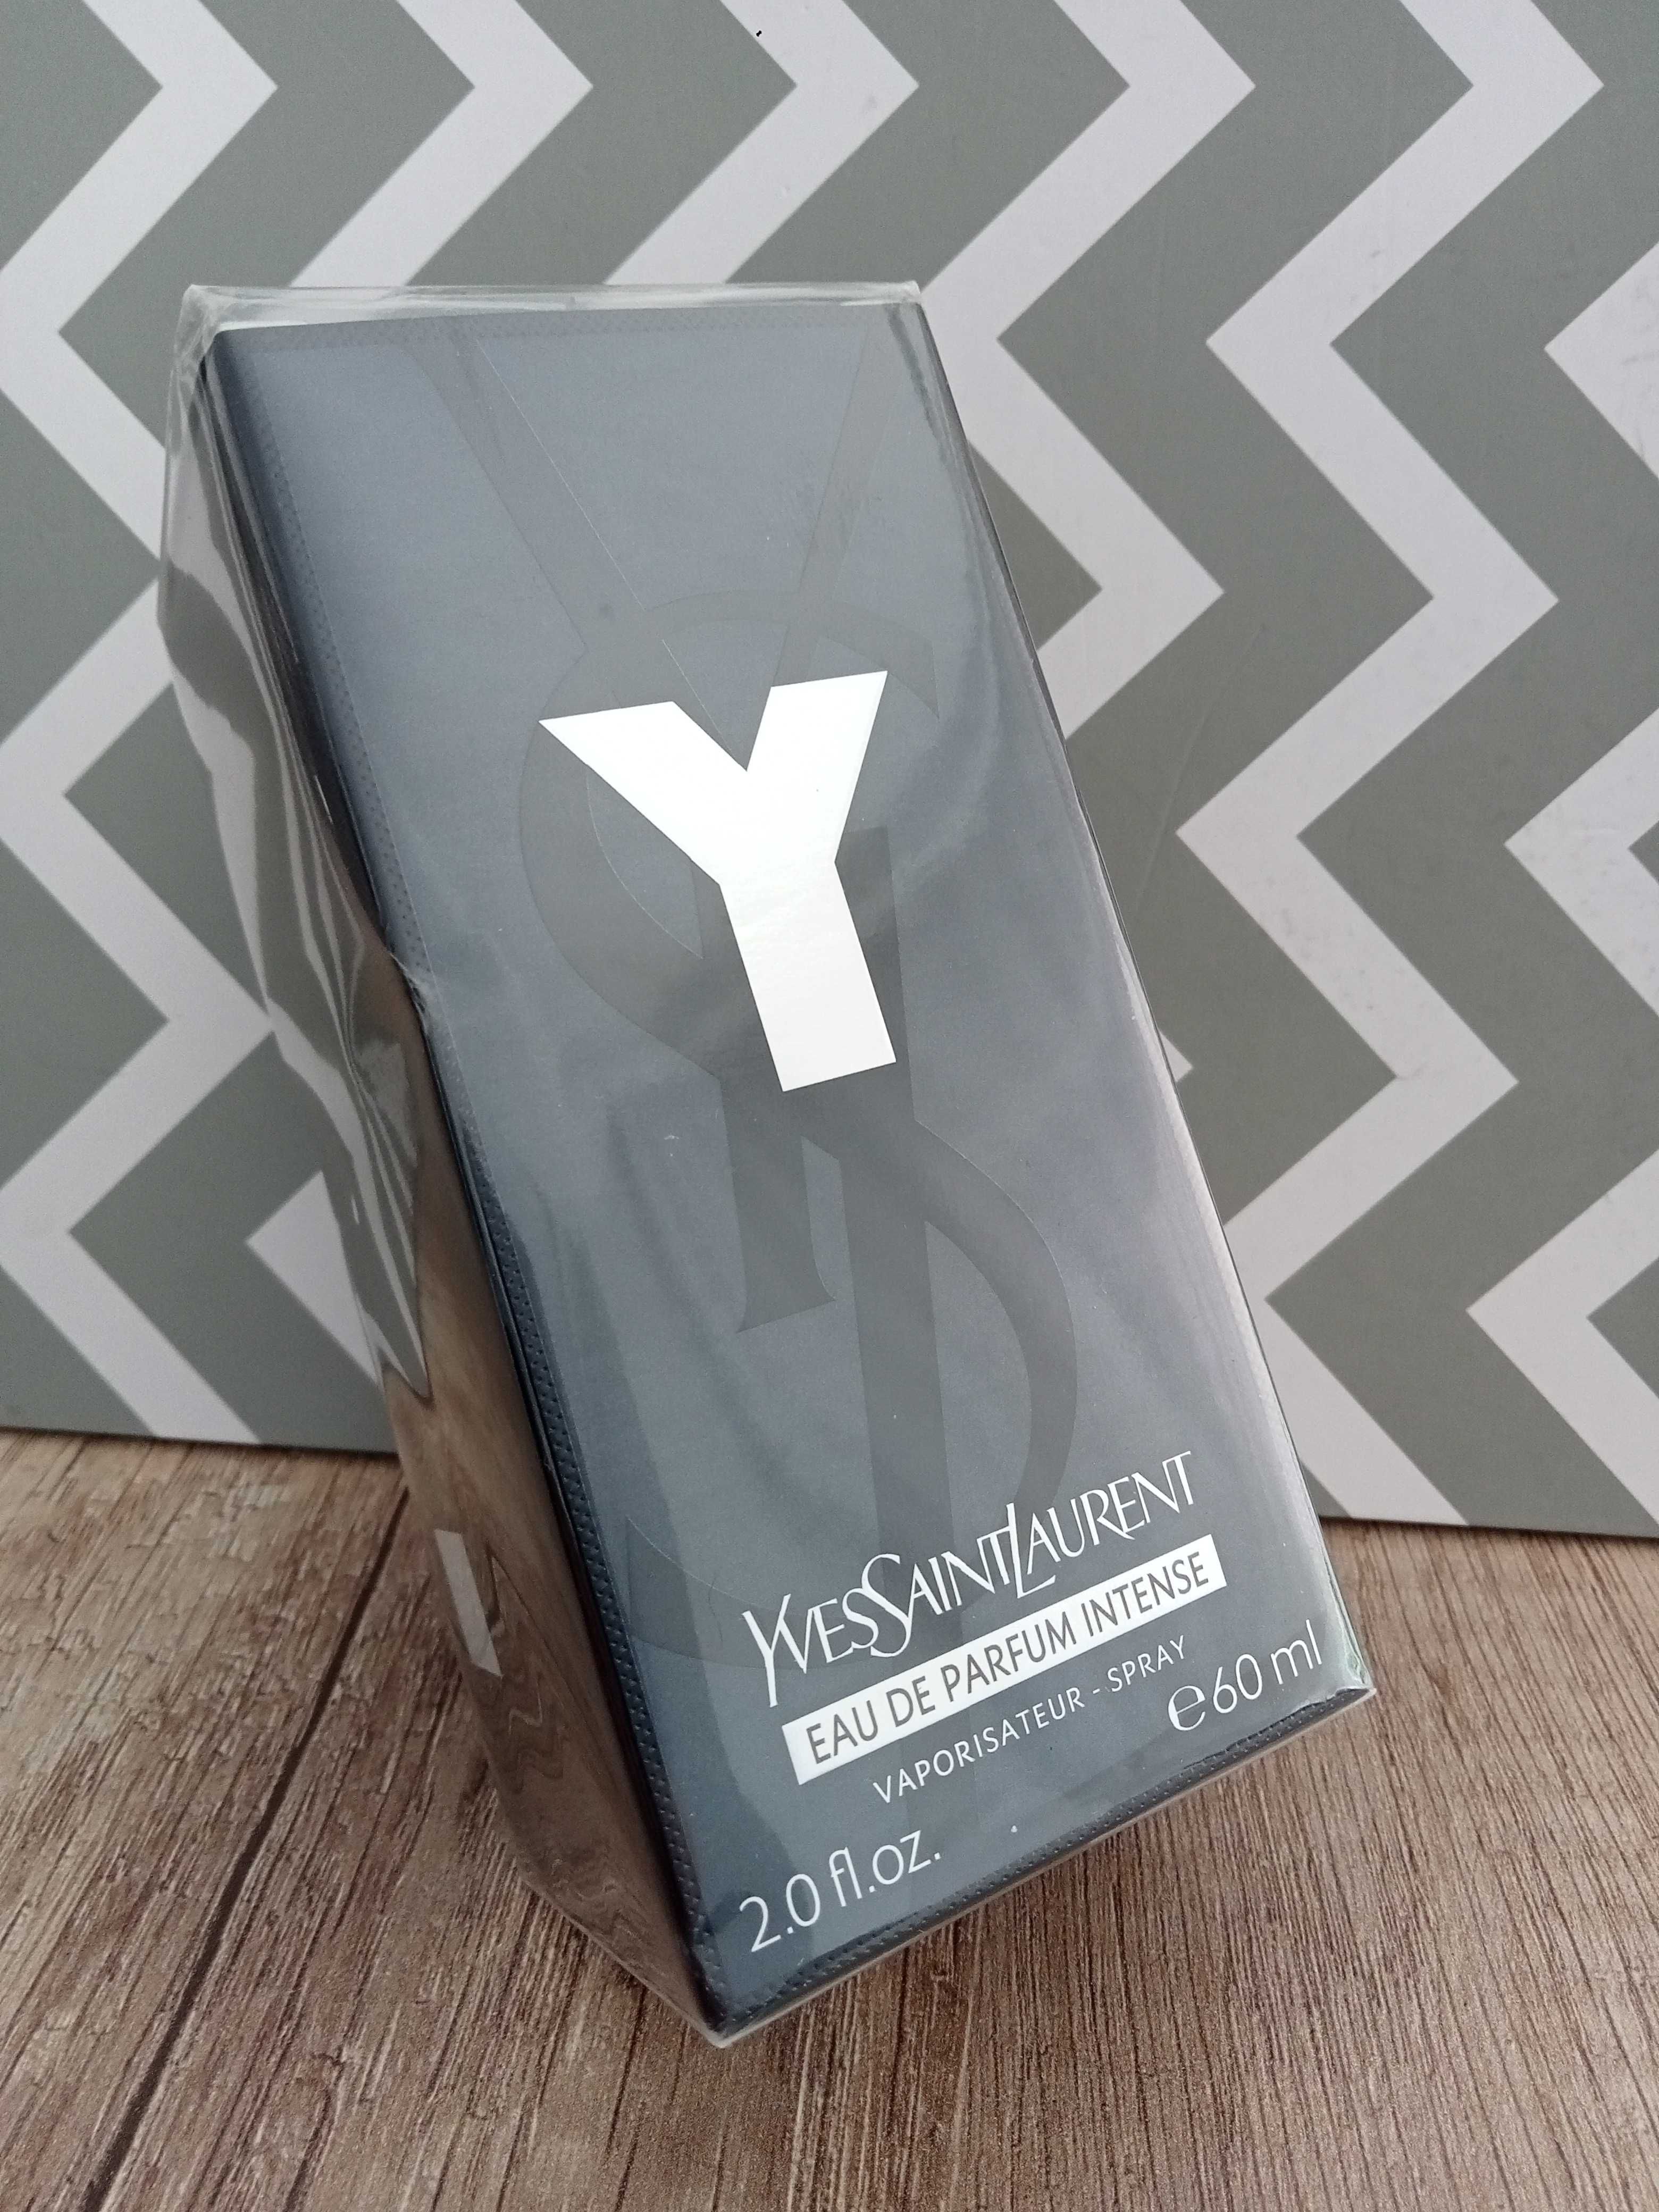 Yves Saint Laurent Y edp Intense woda perfumowana 60ml